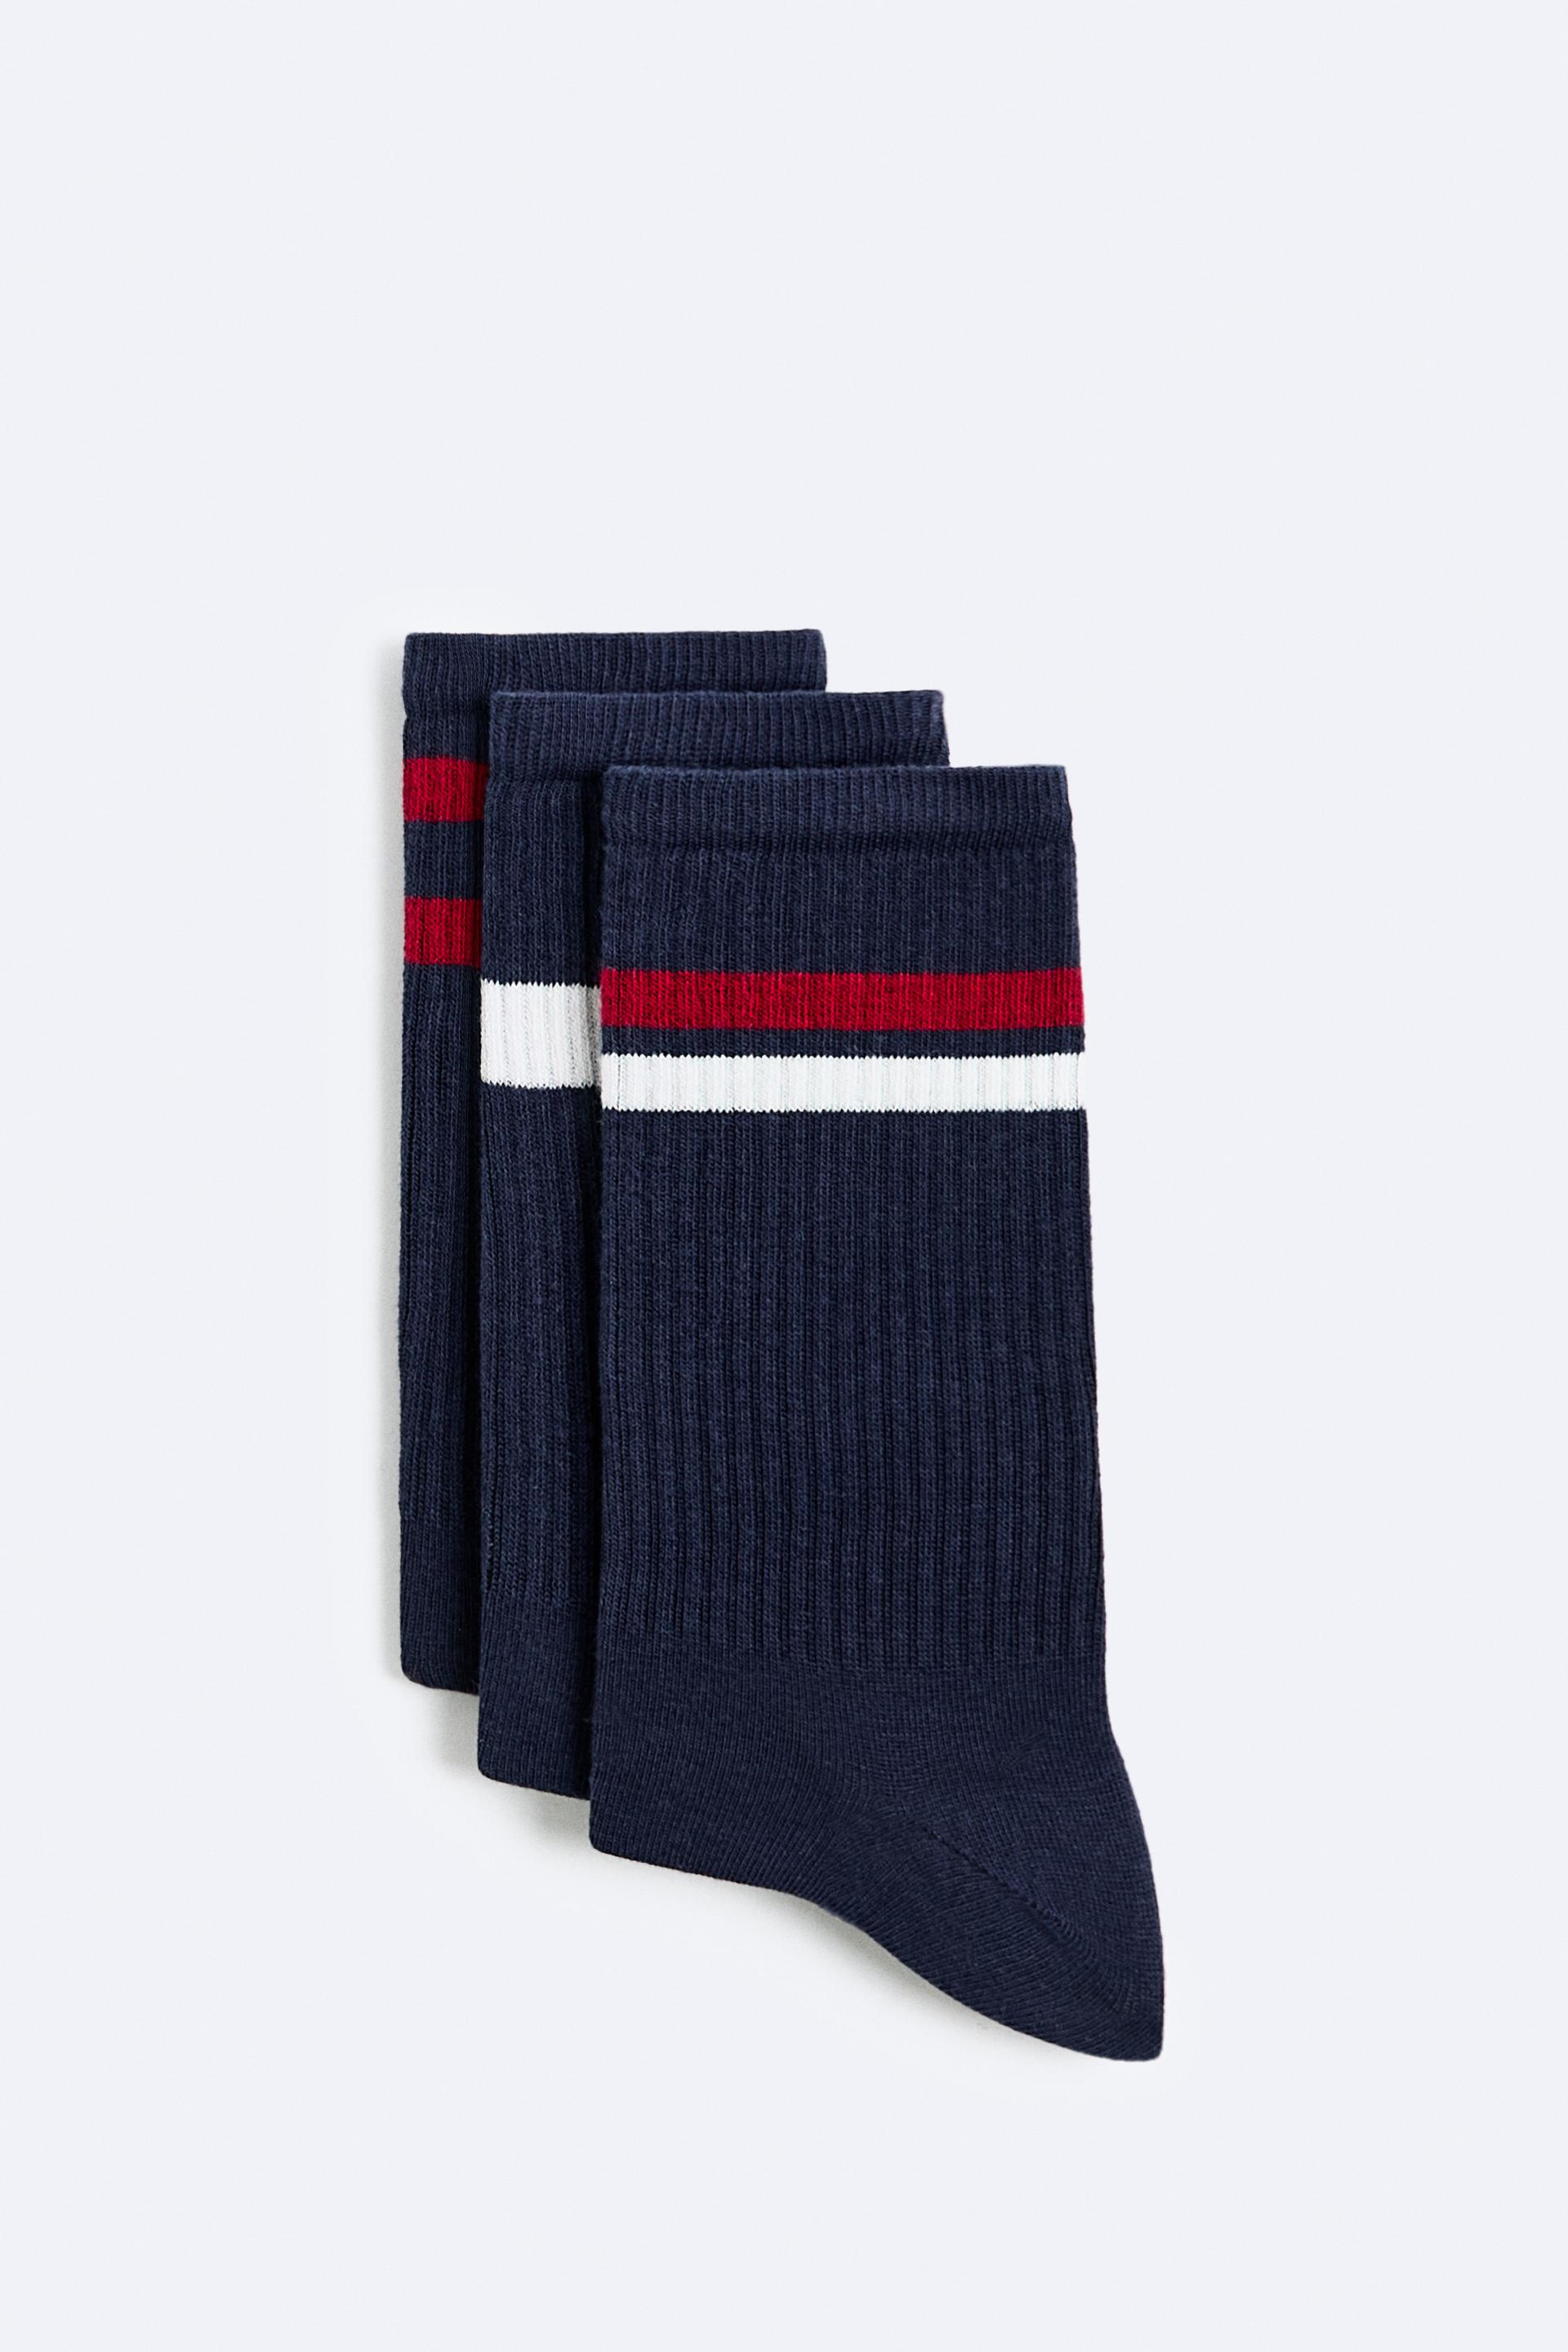 Casual Unisex Ankle Length Socks (Pack of 3) Sky Blue – Devagabond